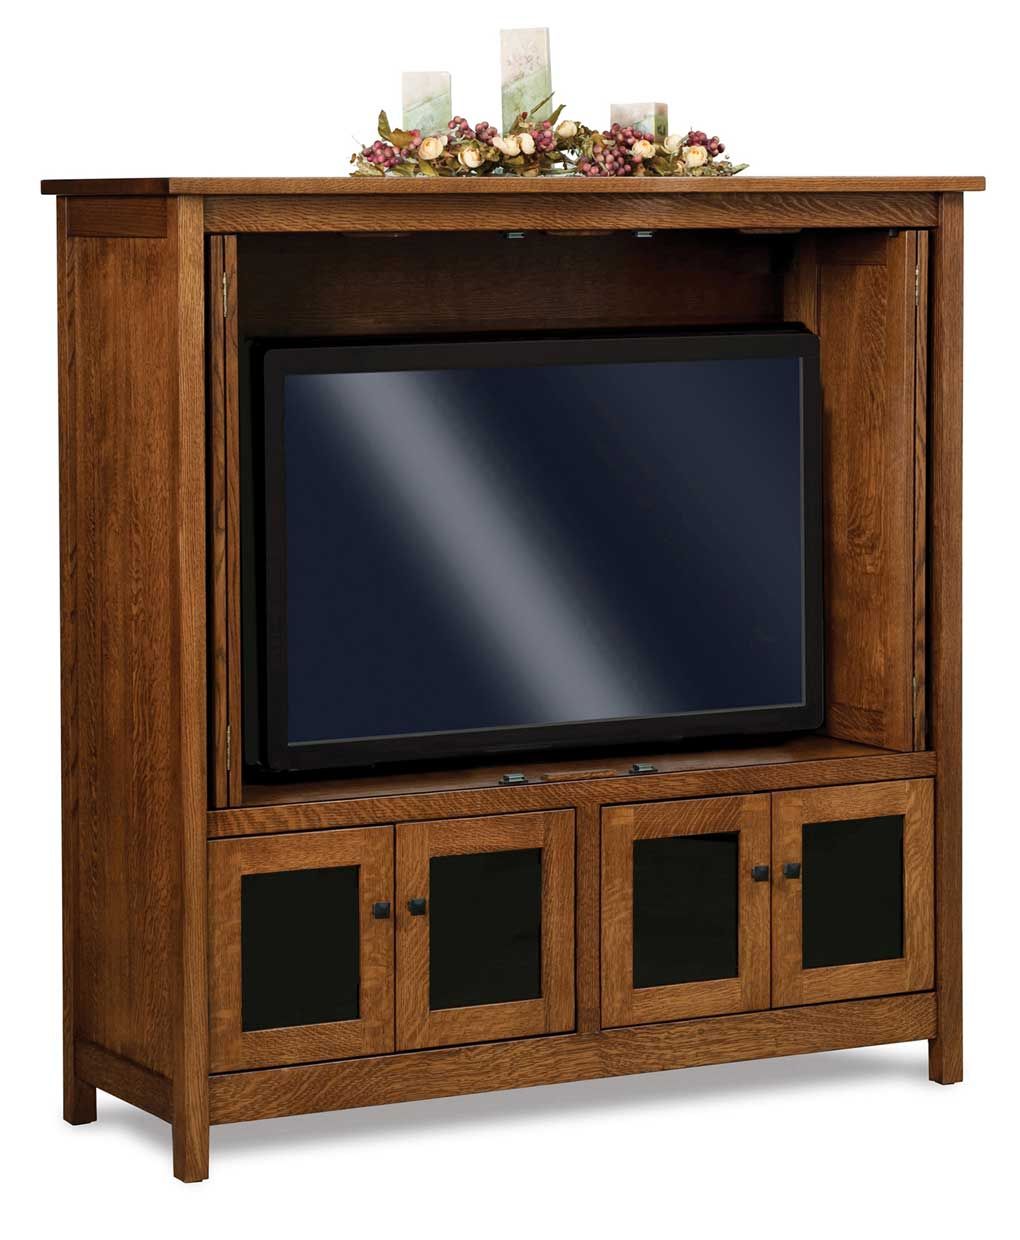 Centennial 4 Door Media Tv Entertainment Center – Amish For Tv Media Furniture (View 9 of 15)